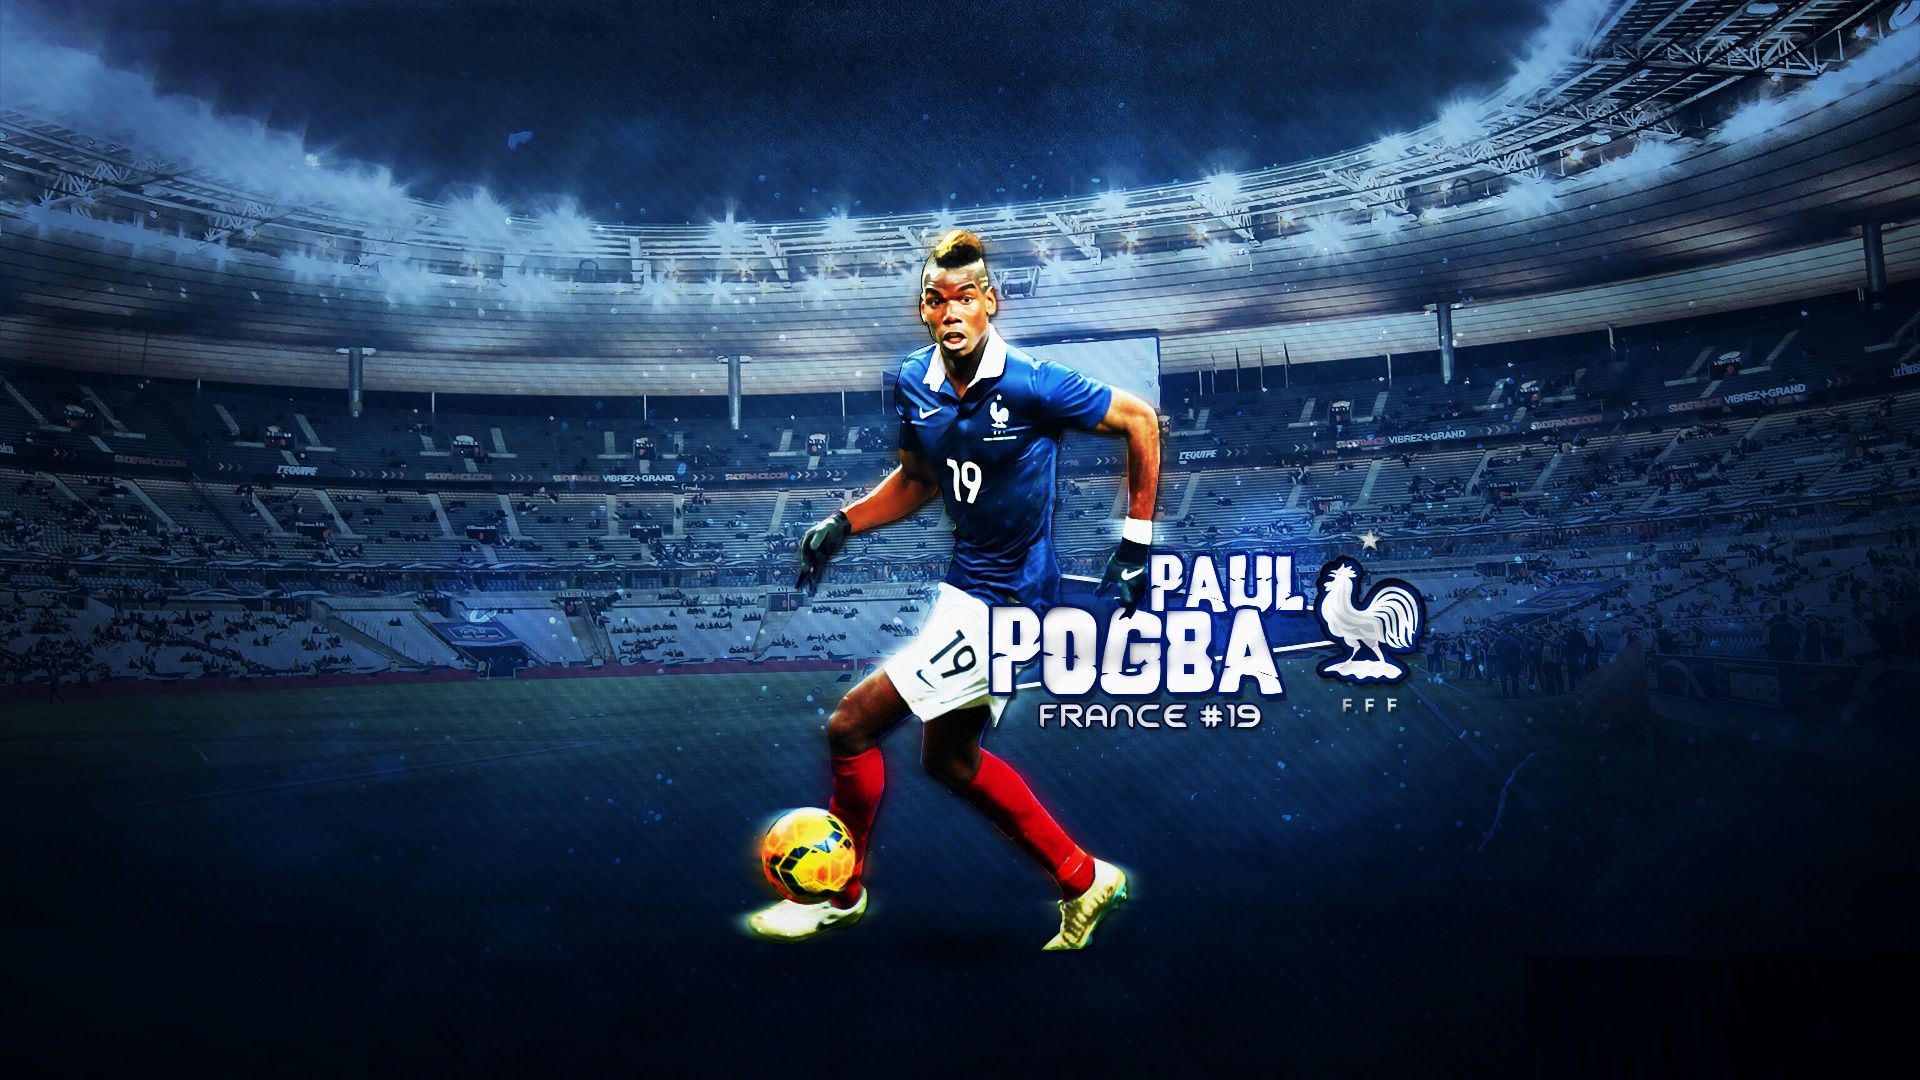 Paul Pogba Football Player Wallpaper | HD Wallpapers